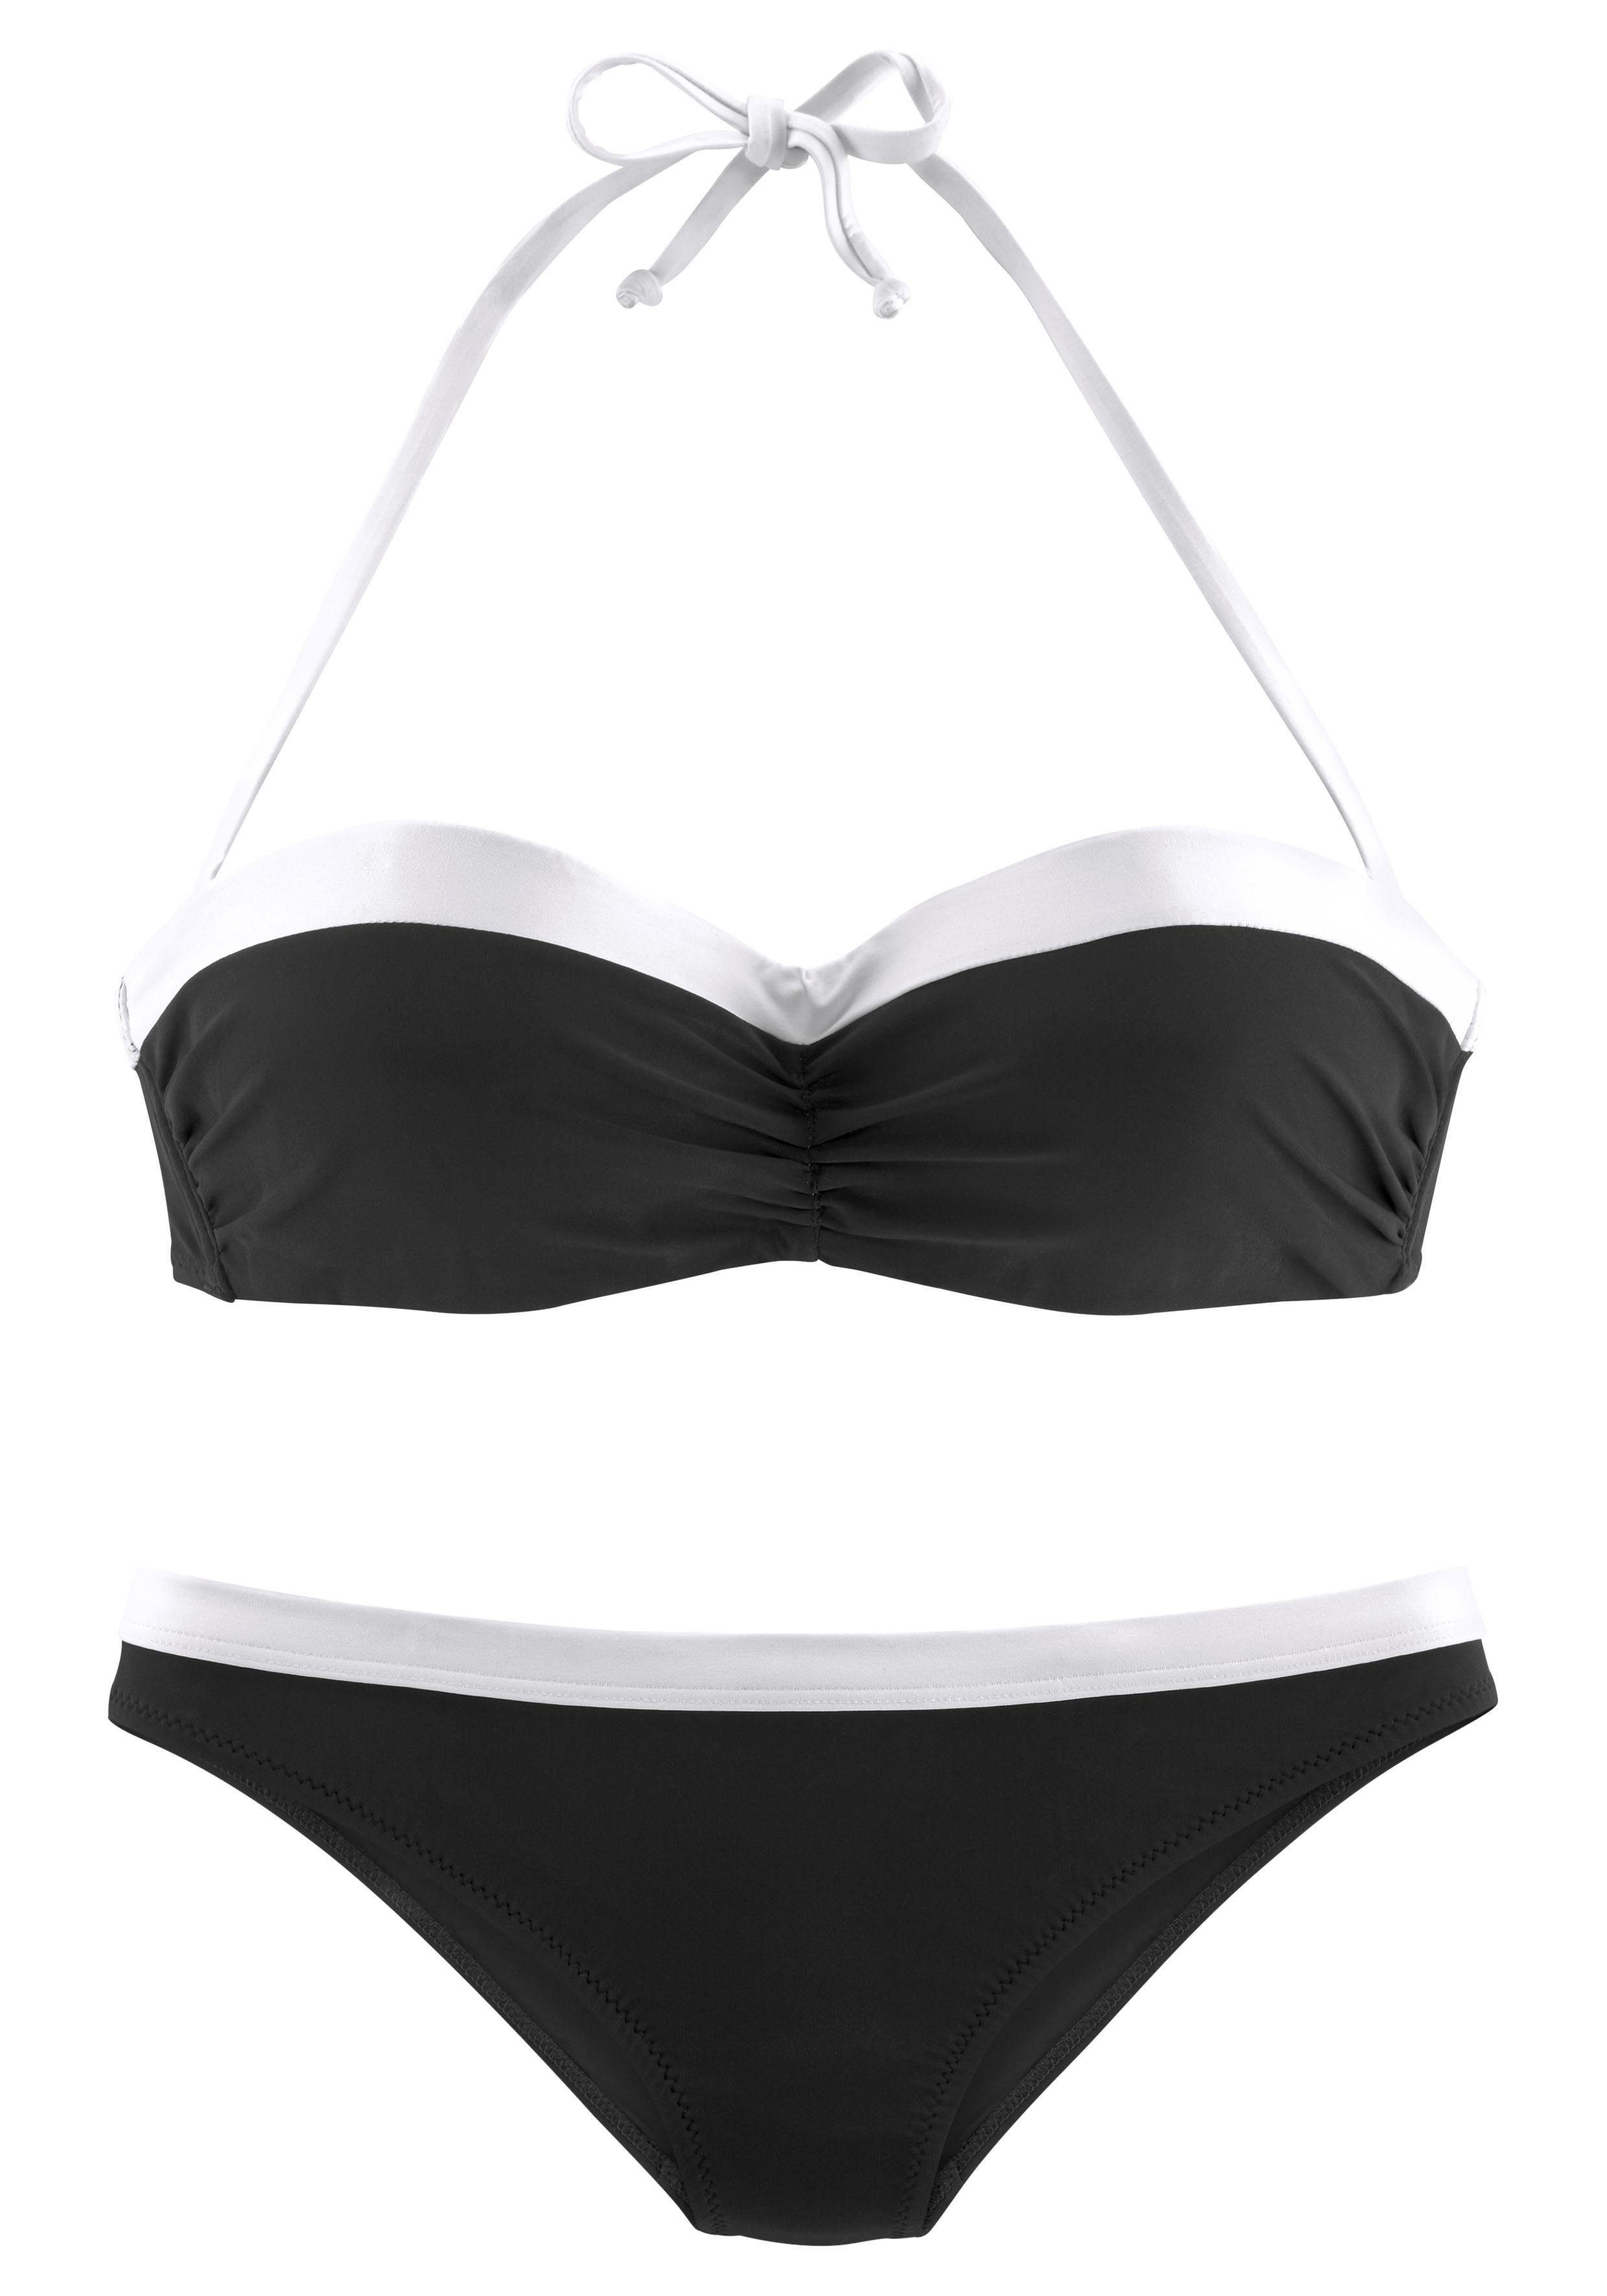 LASCANA Bügel-Bandeau-Bikini mit kontrastfarbener Einfassung